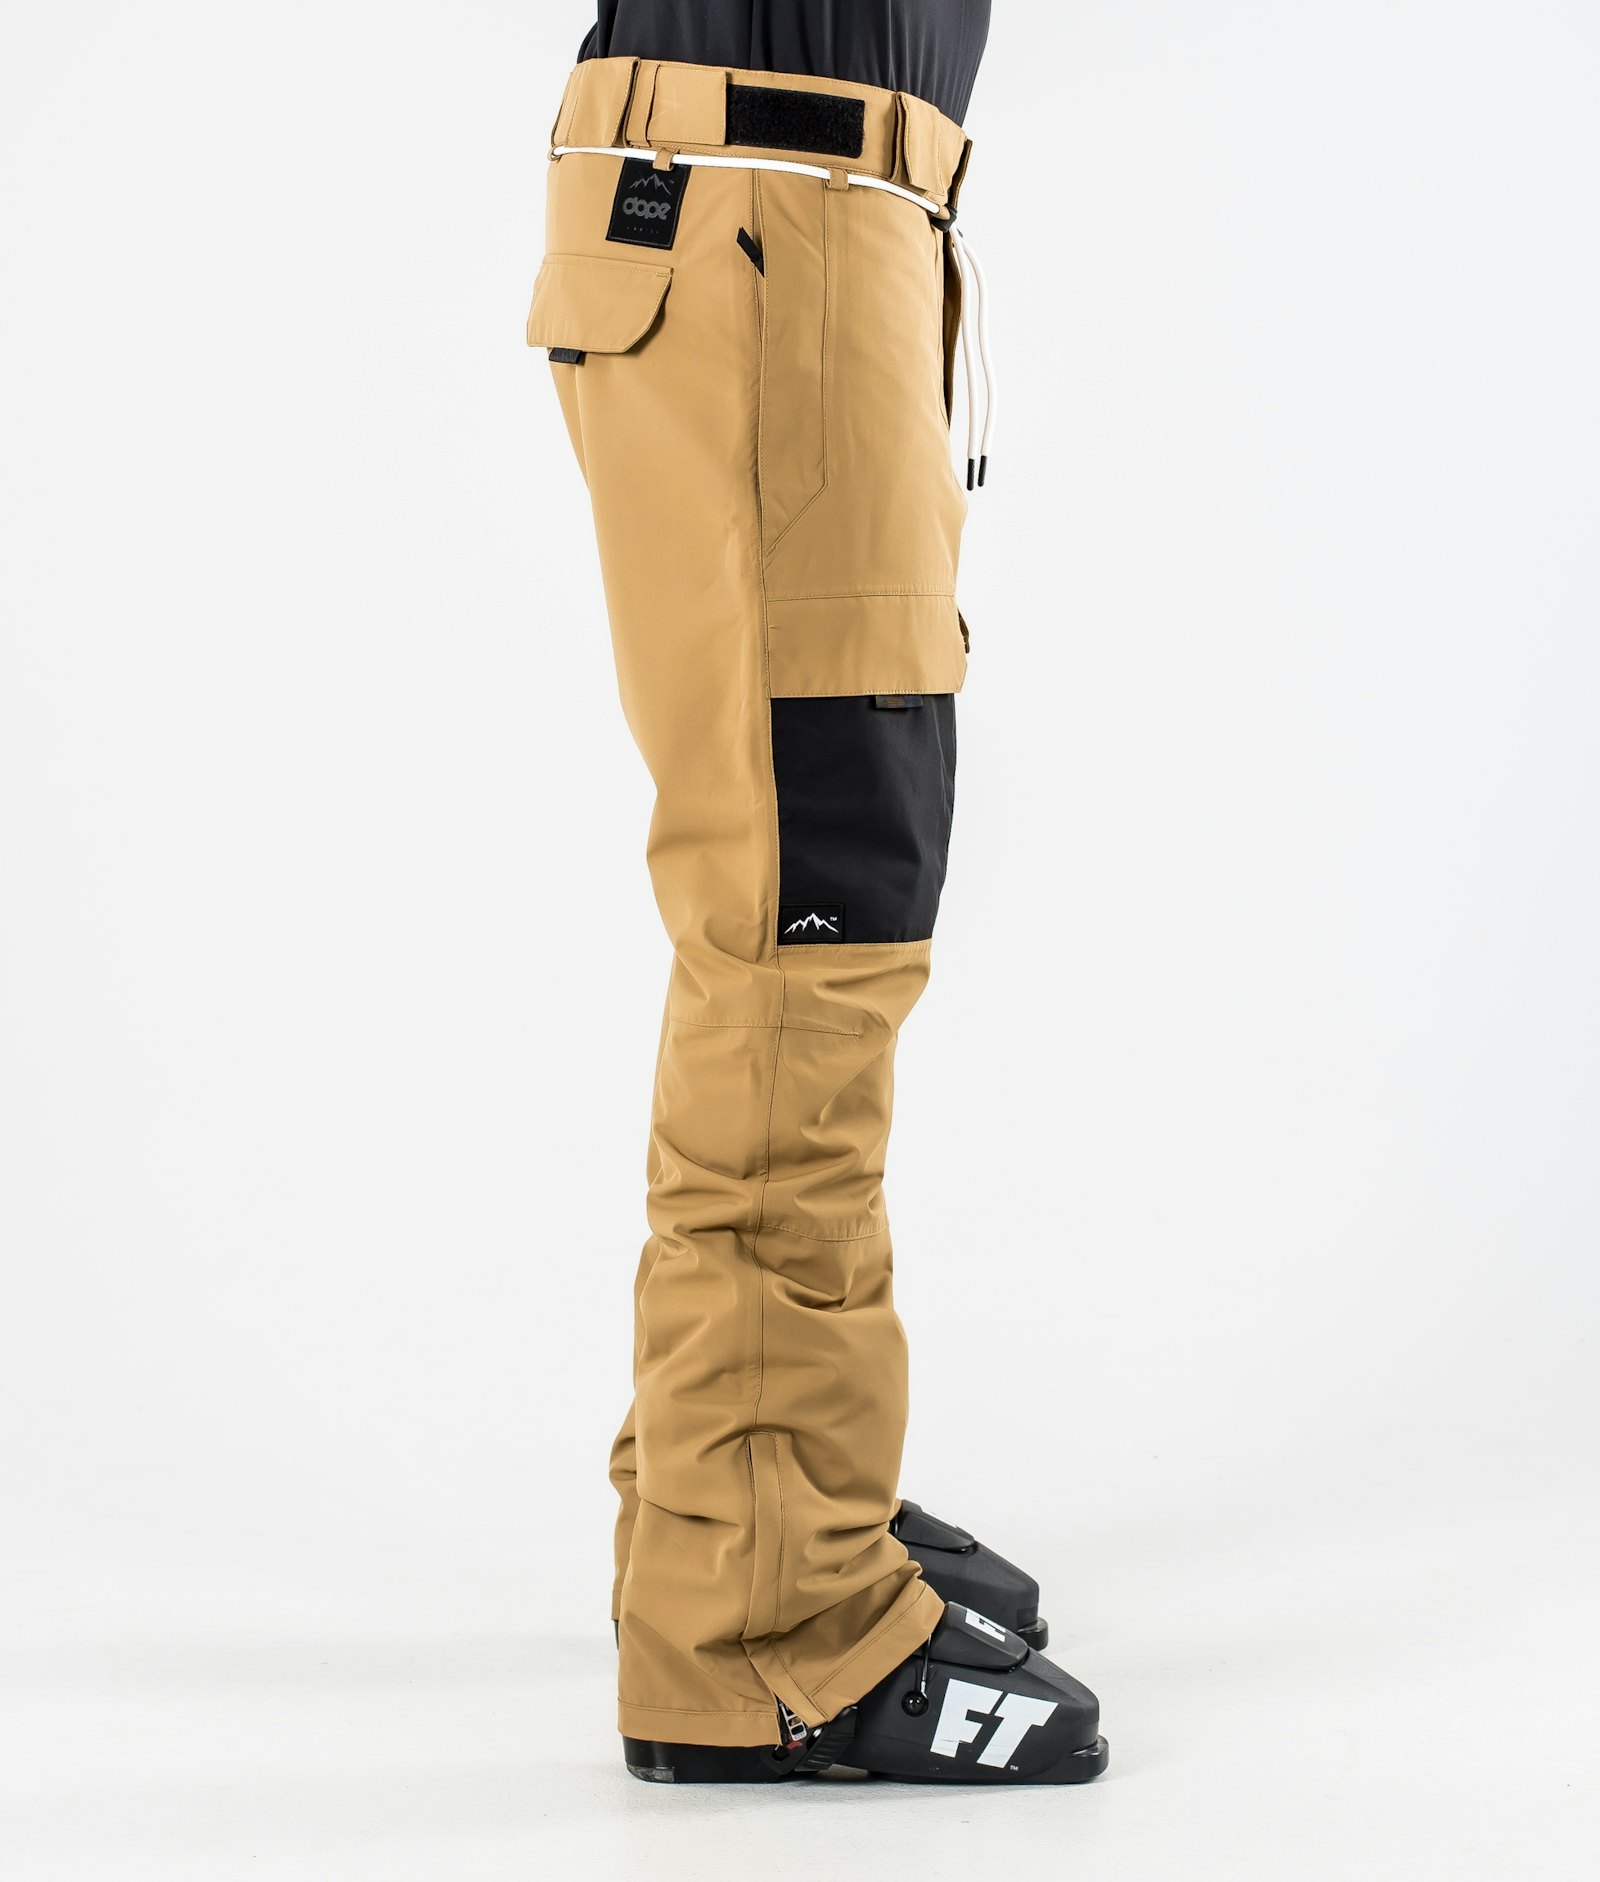 Poise Pantalon de Ski Homme Gold/Black